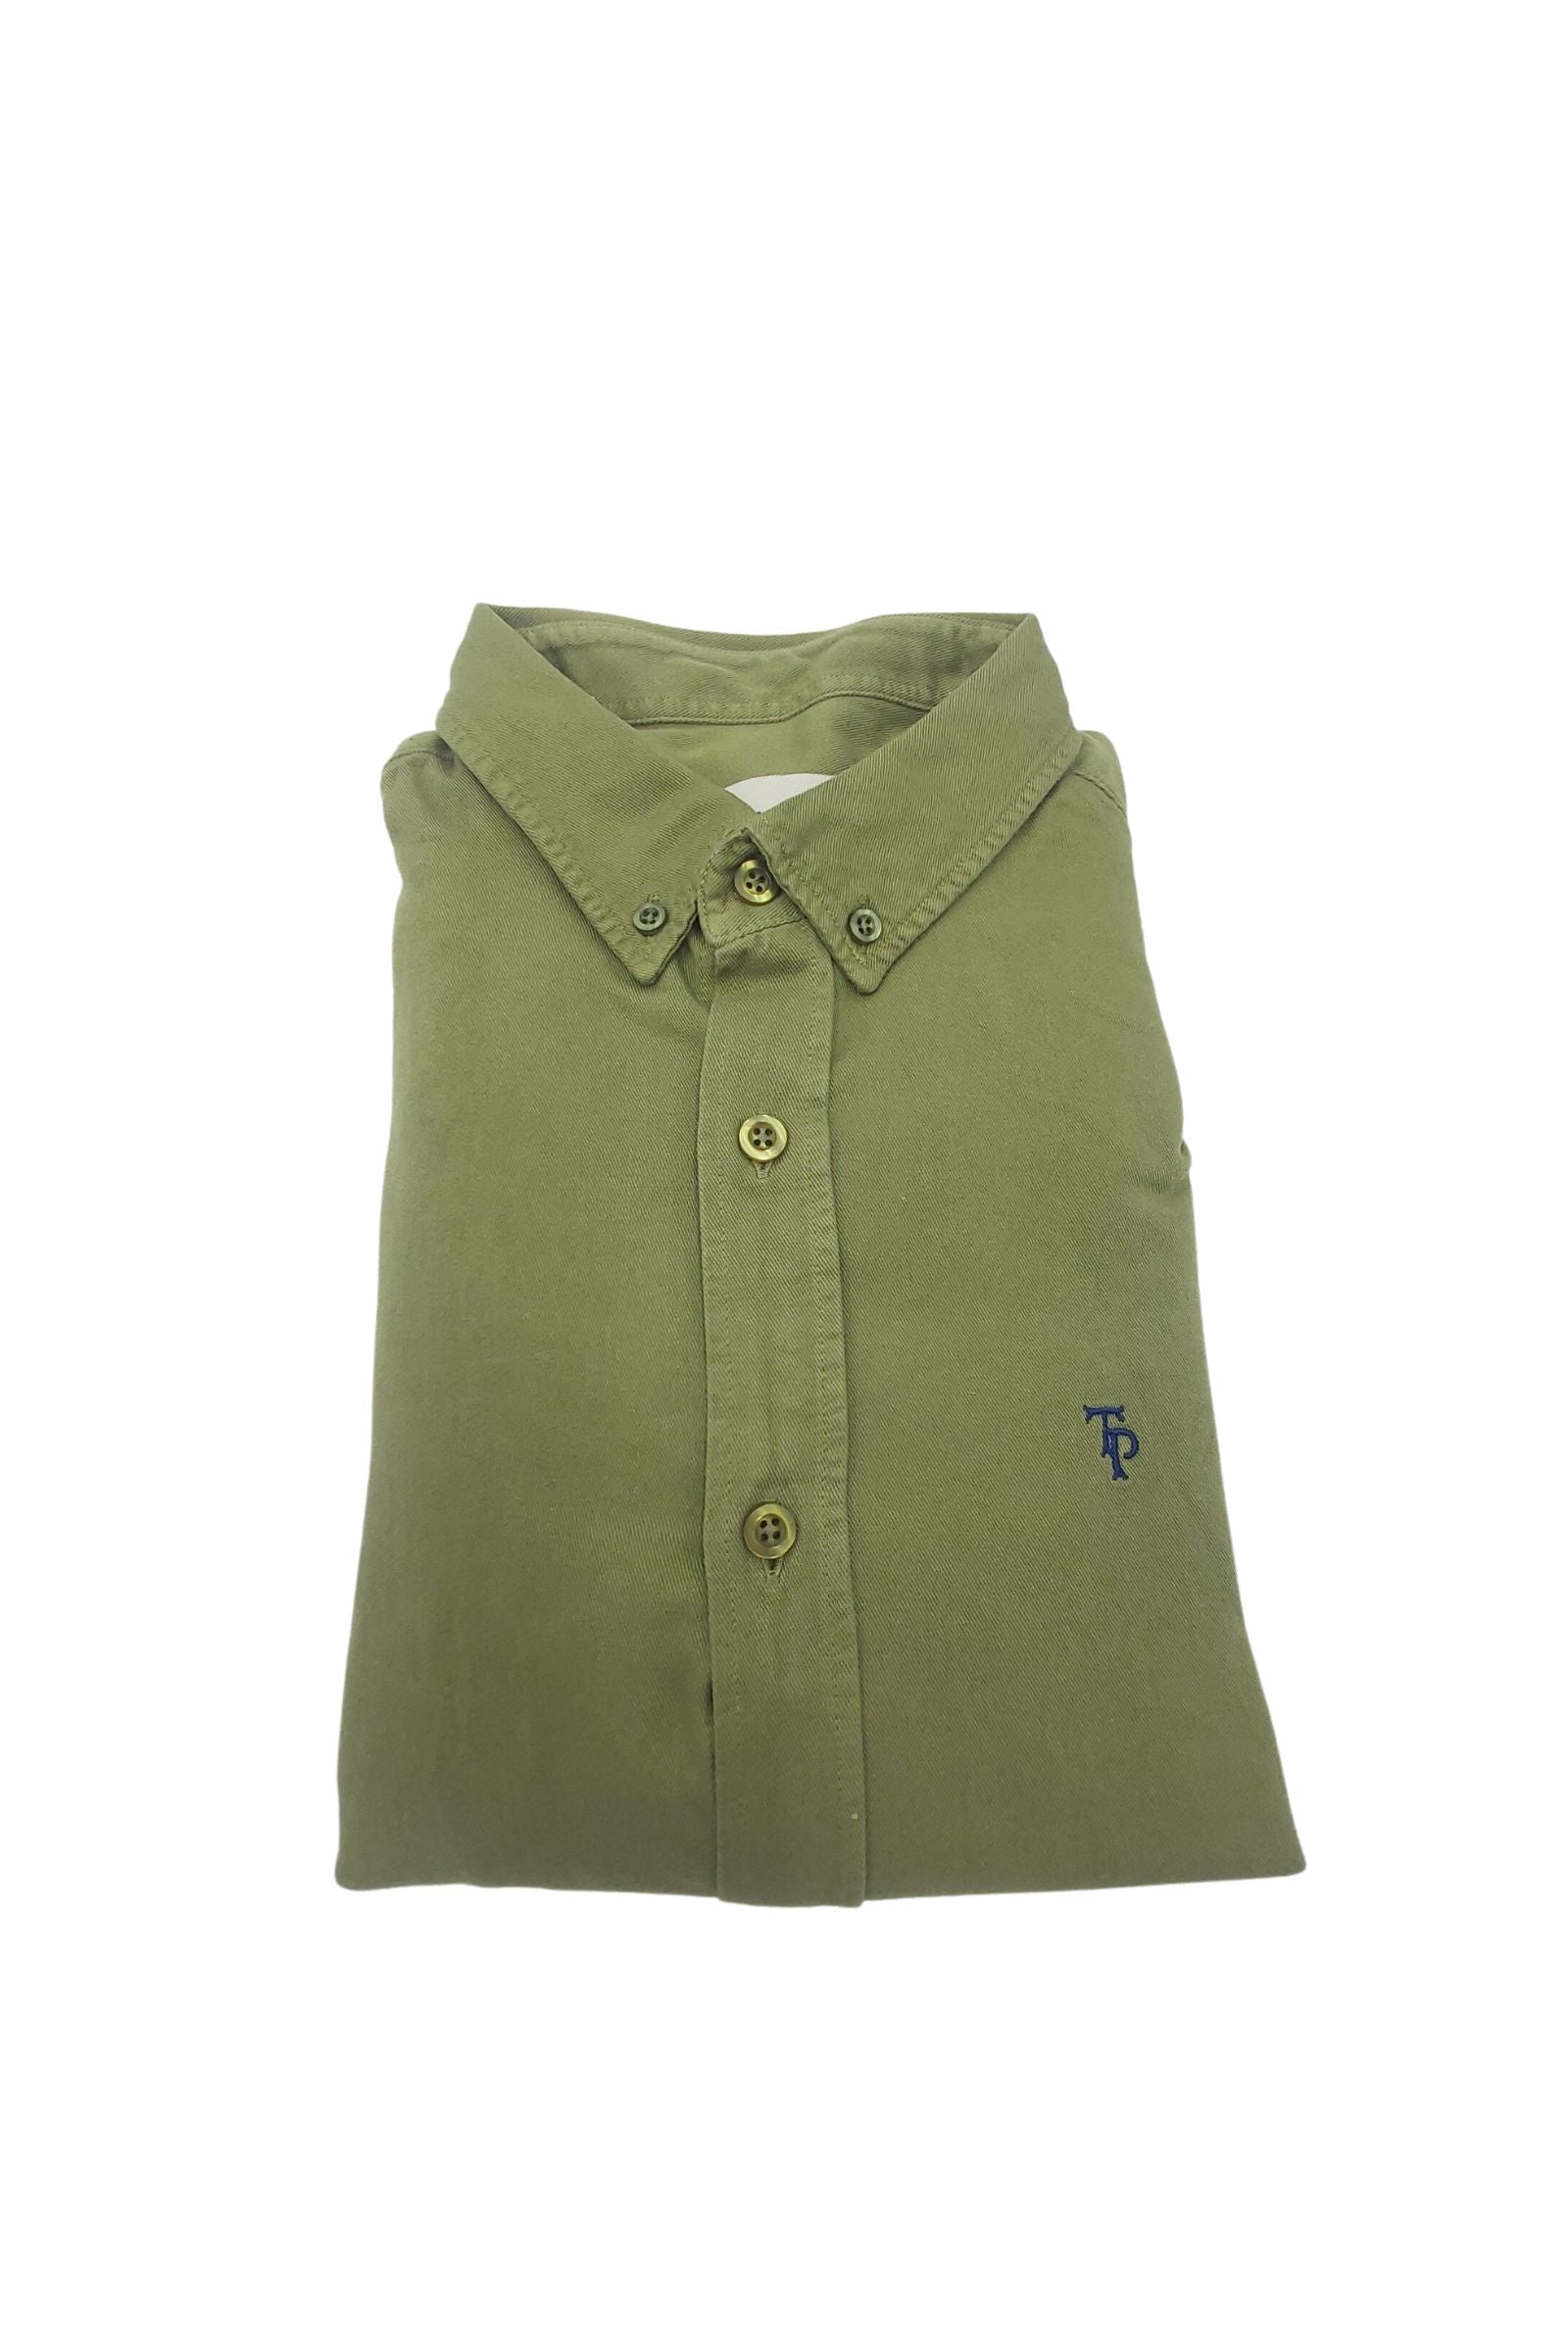 Men's Tom Penn Long Sleeve Button Down Shirt - Green-Front View